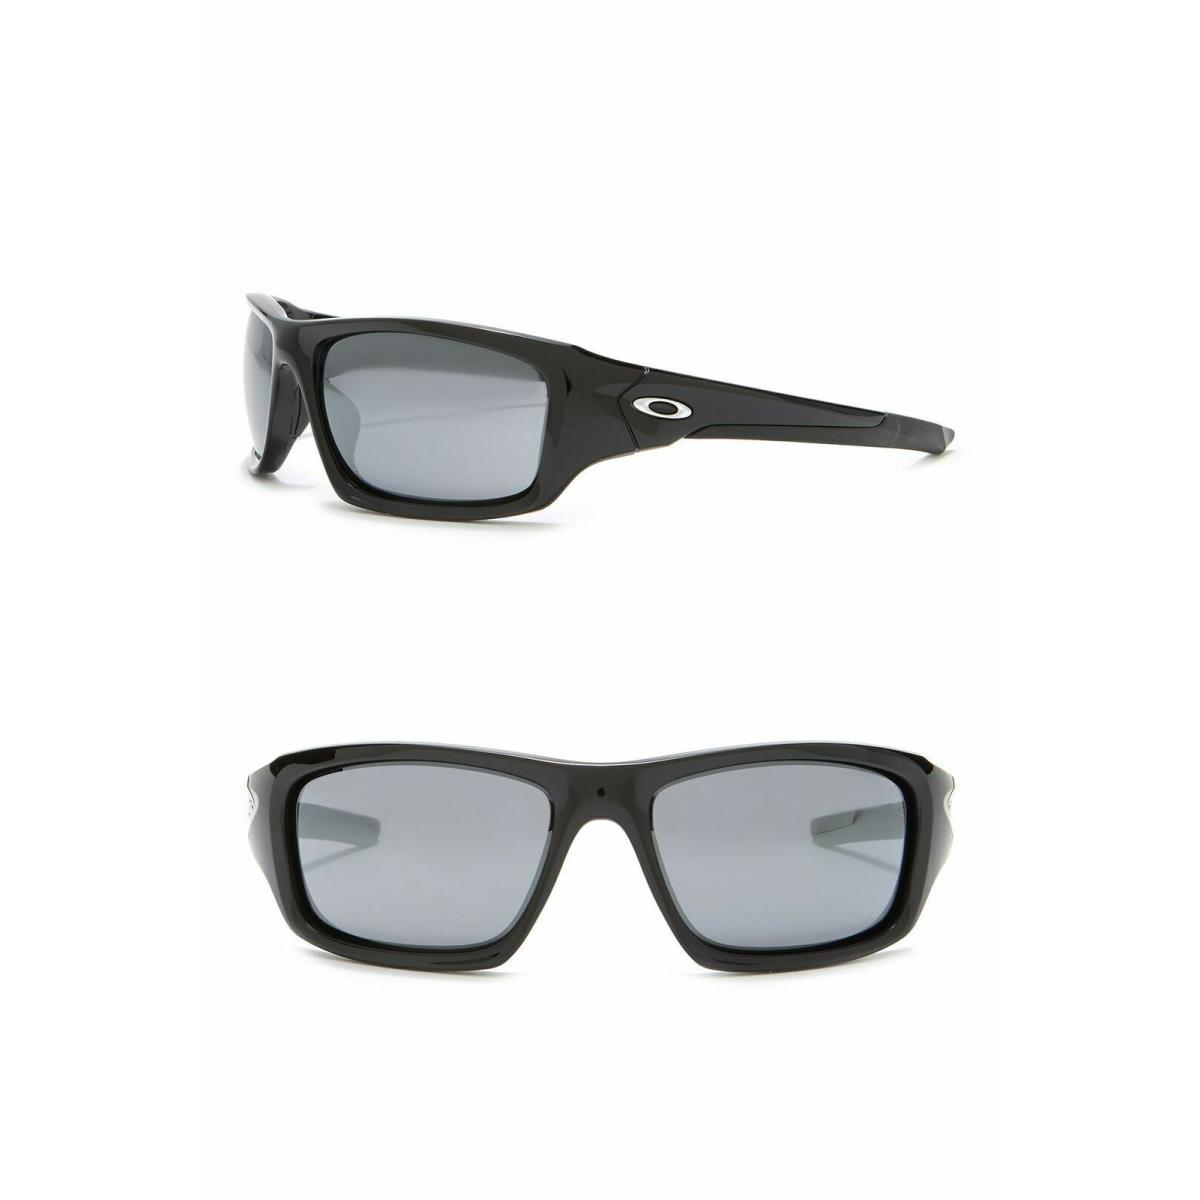 OO9236 Mens Oakley Valve Sunglasses OO9236-01